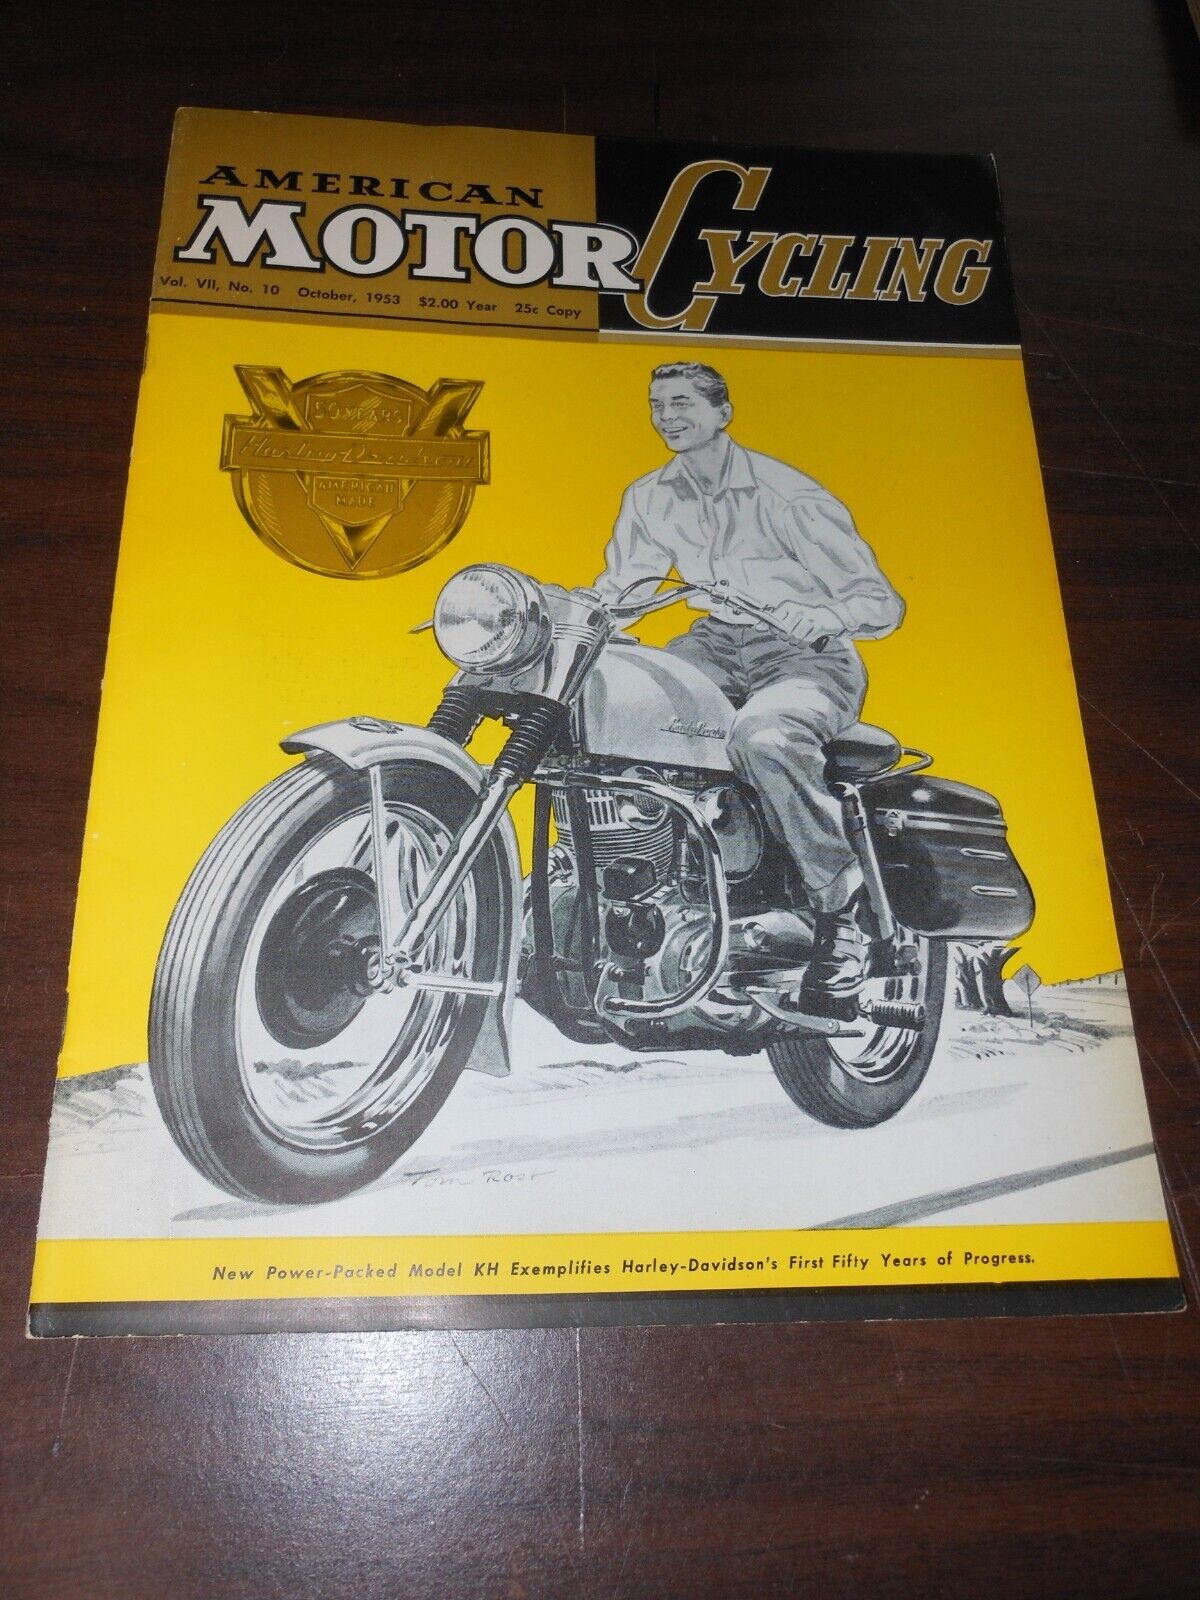 HARLEY DAVIDSON 50TH ANNIVERSARY AMERICAN MOTORCYCLING MAGAZINE 1953.